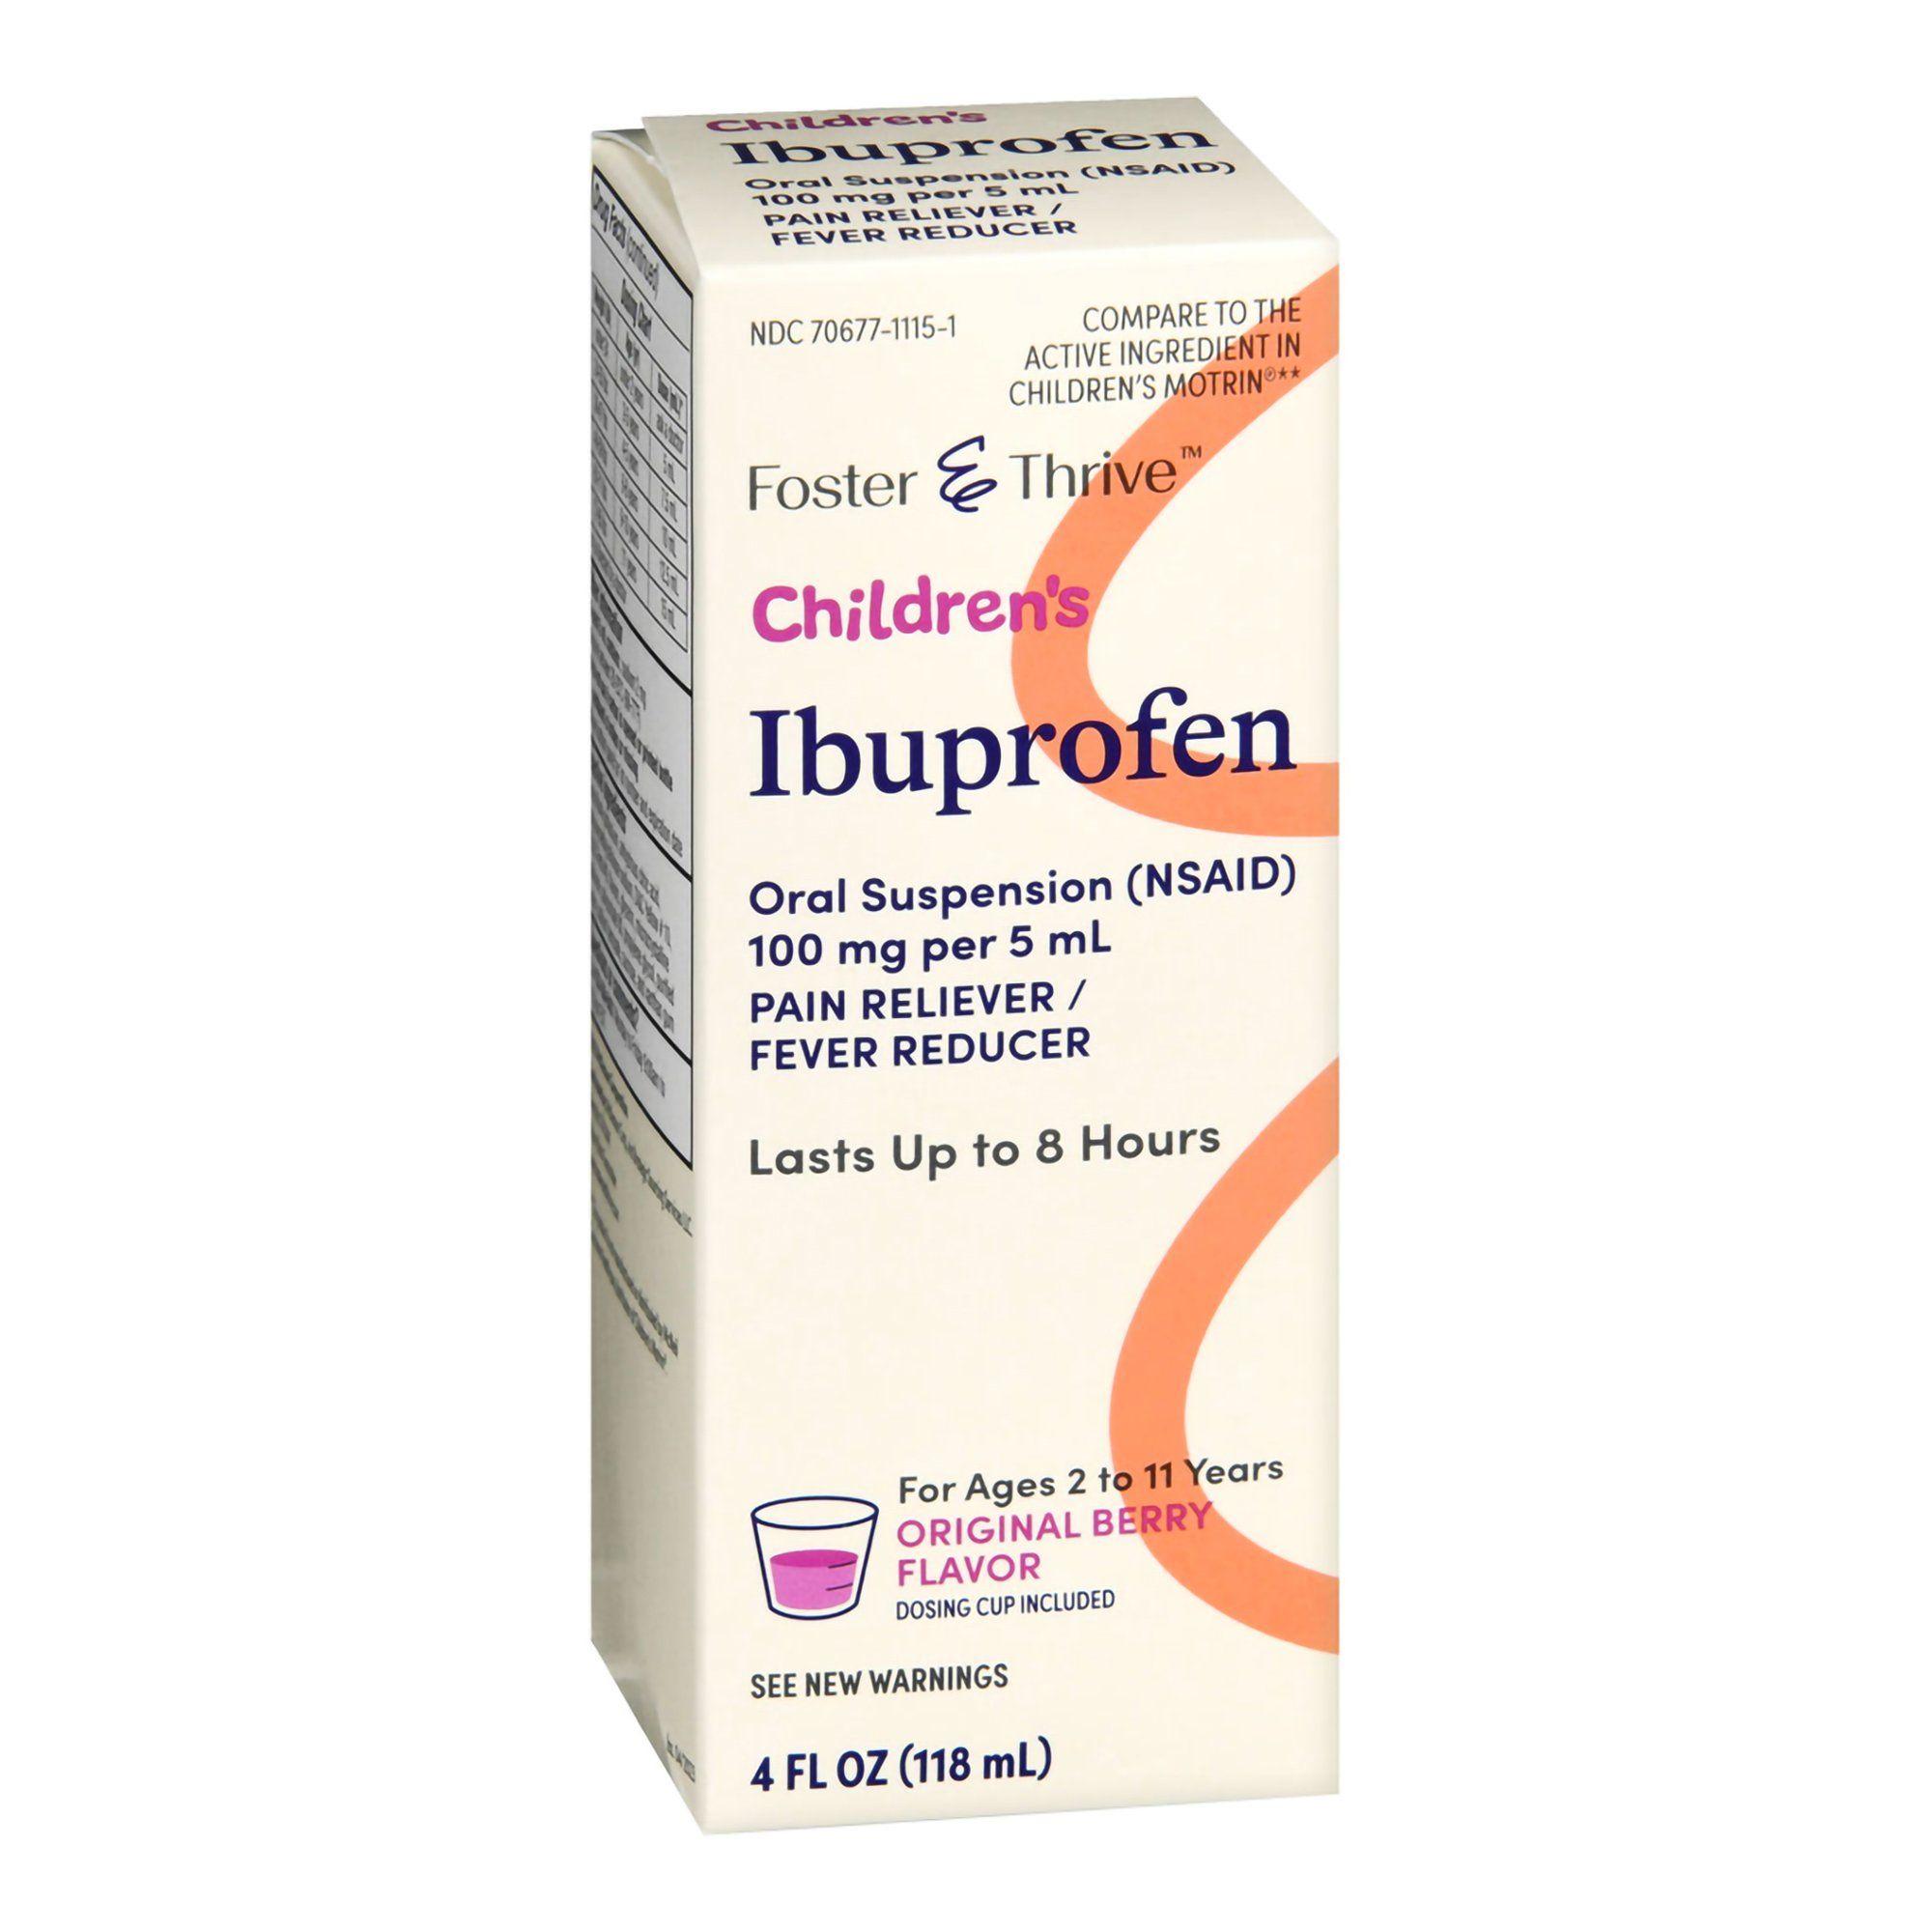 Foster & Thrive Children's Ibuprofen, 100 mg, Original Berry - 4 fl oz